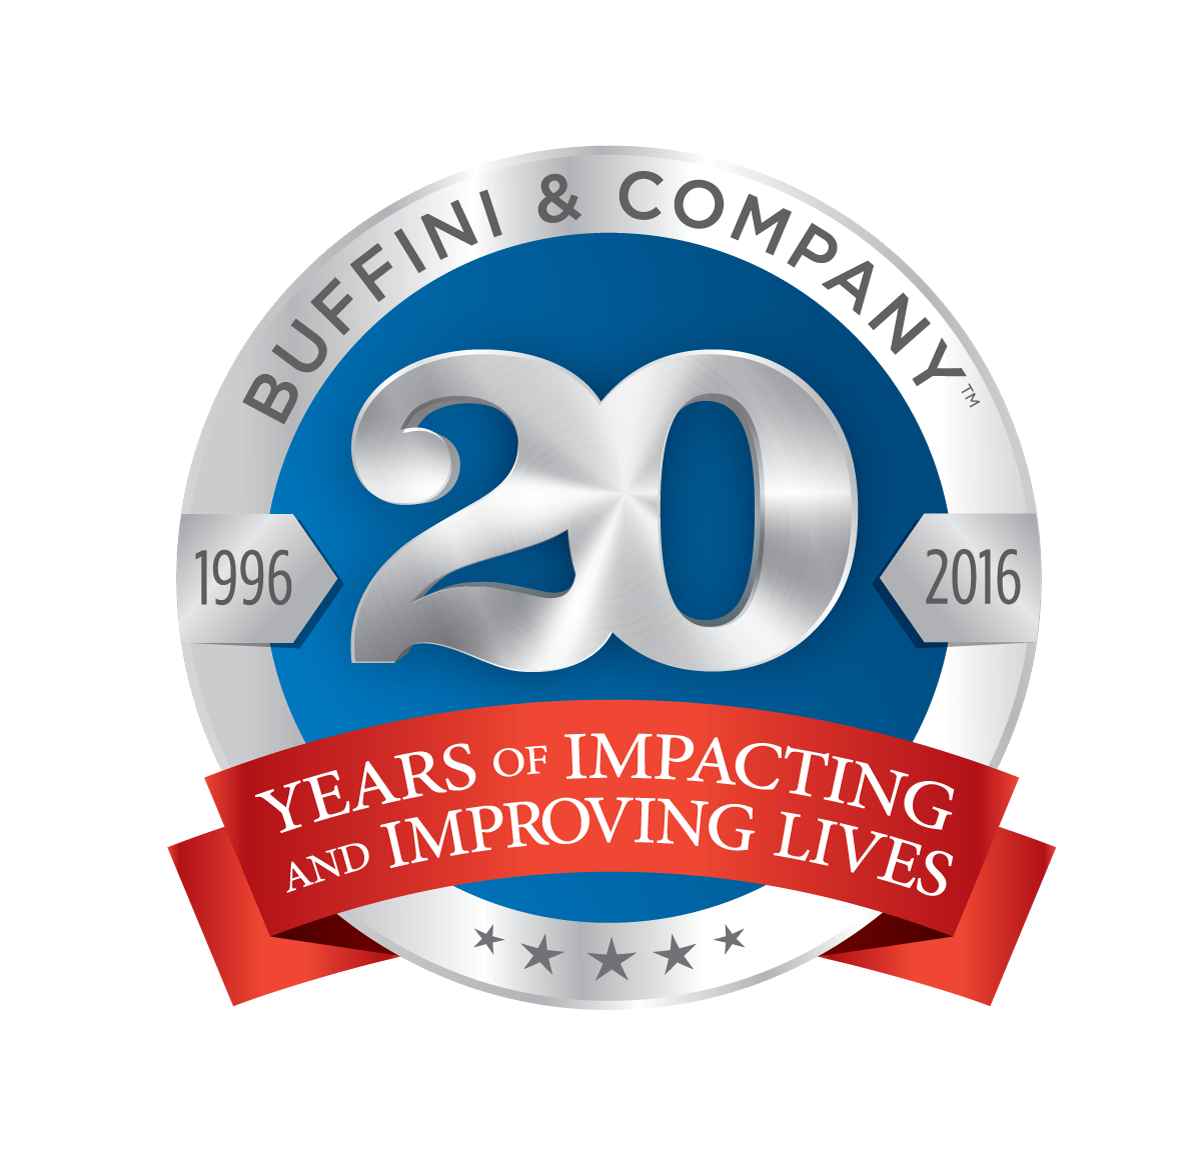 Buffini Company Celebrates 20 Years Of Impacting And Improving Lives